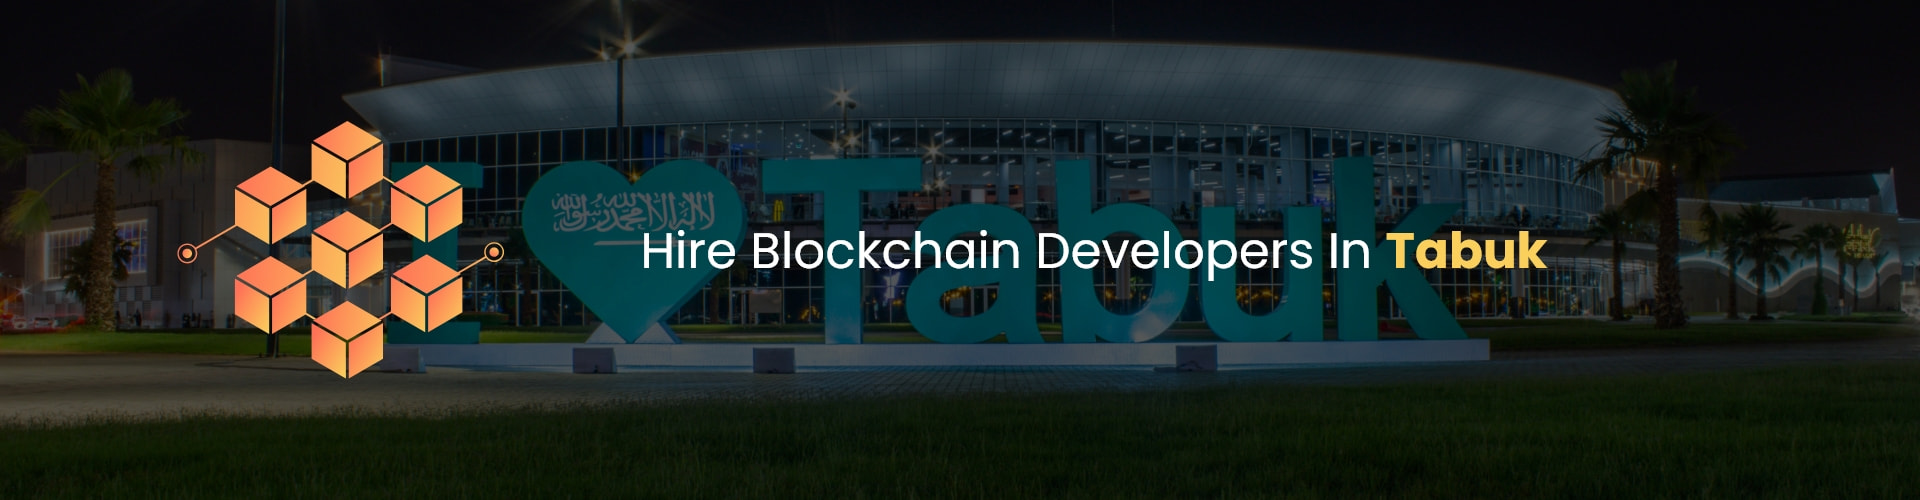 hire blockchain developers in tabuk